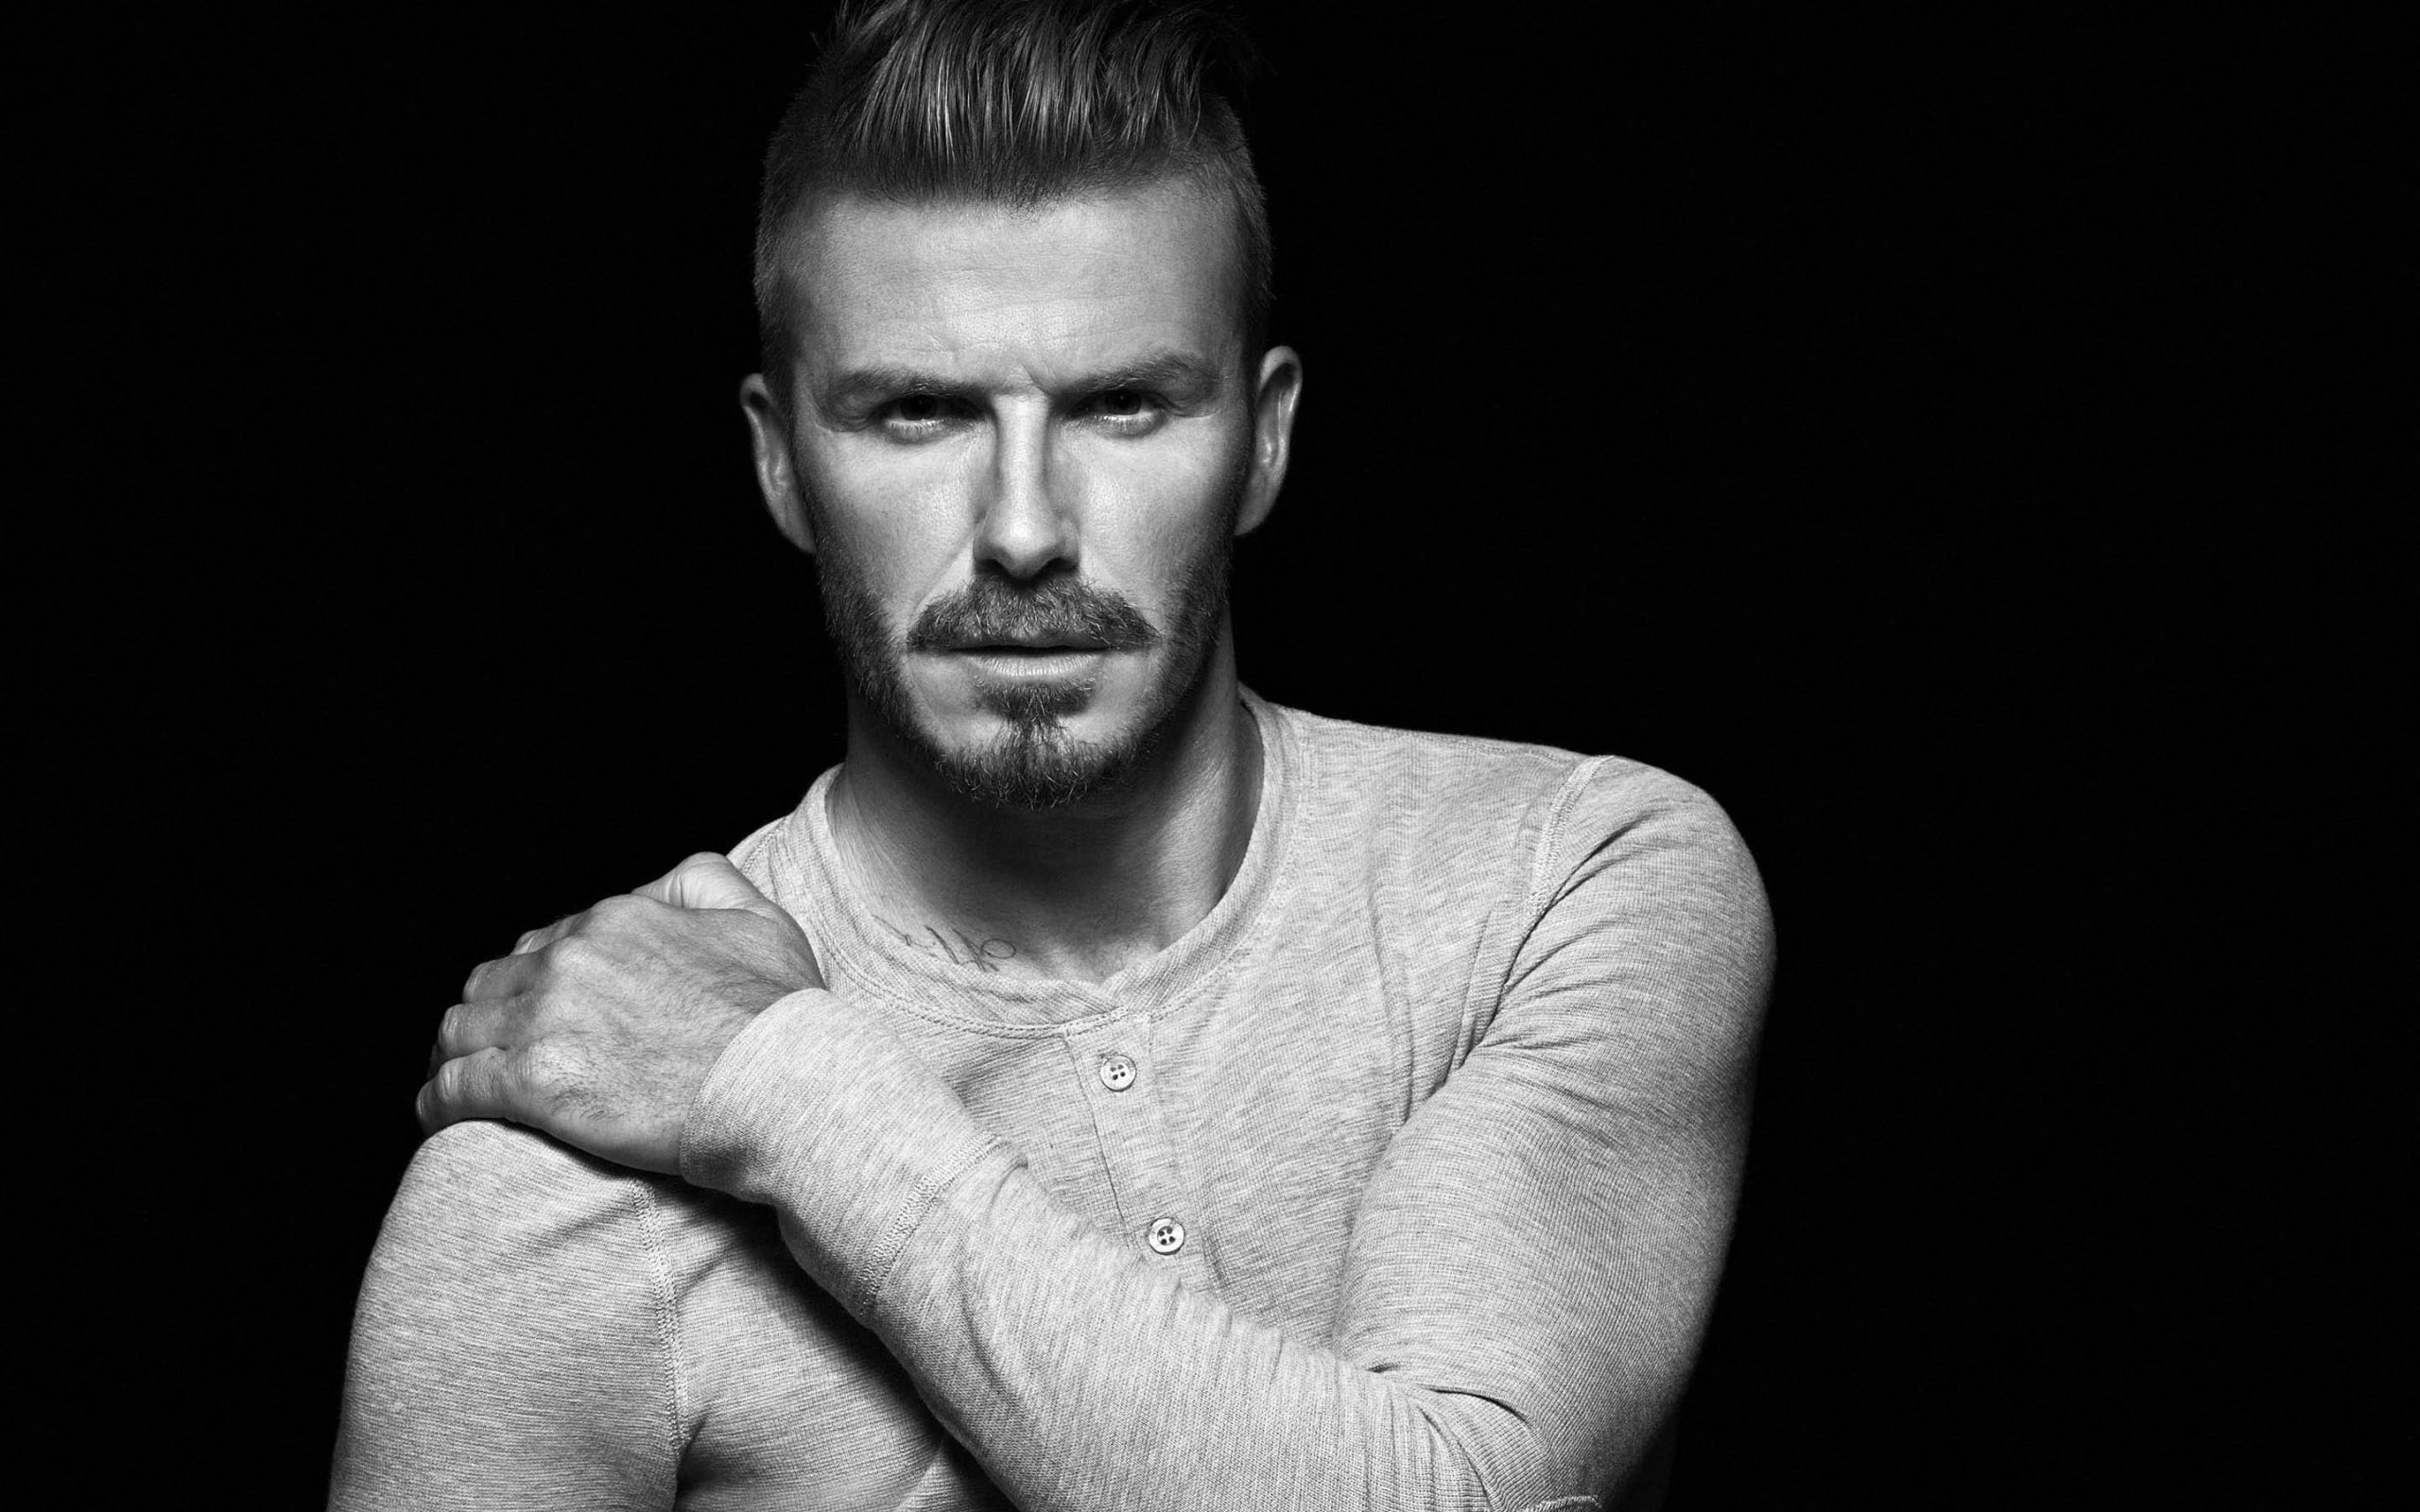 Wallpaper David Beckham, Football Player, Bw, Black And White